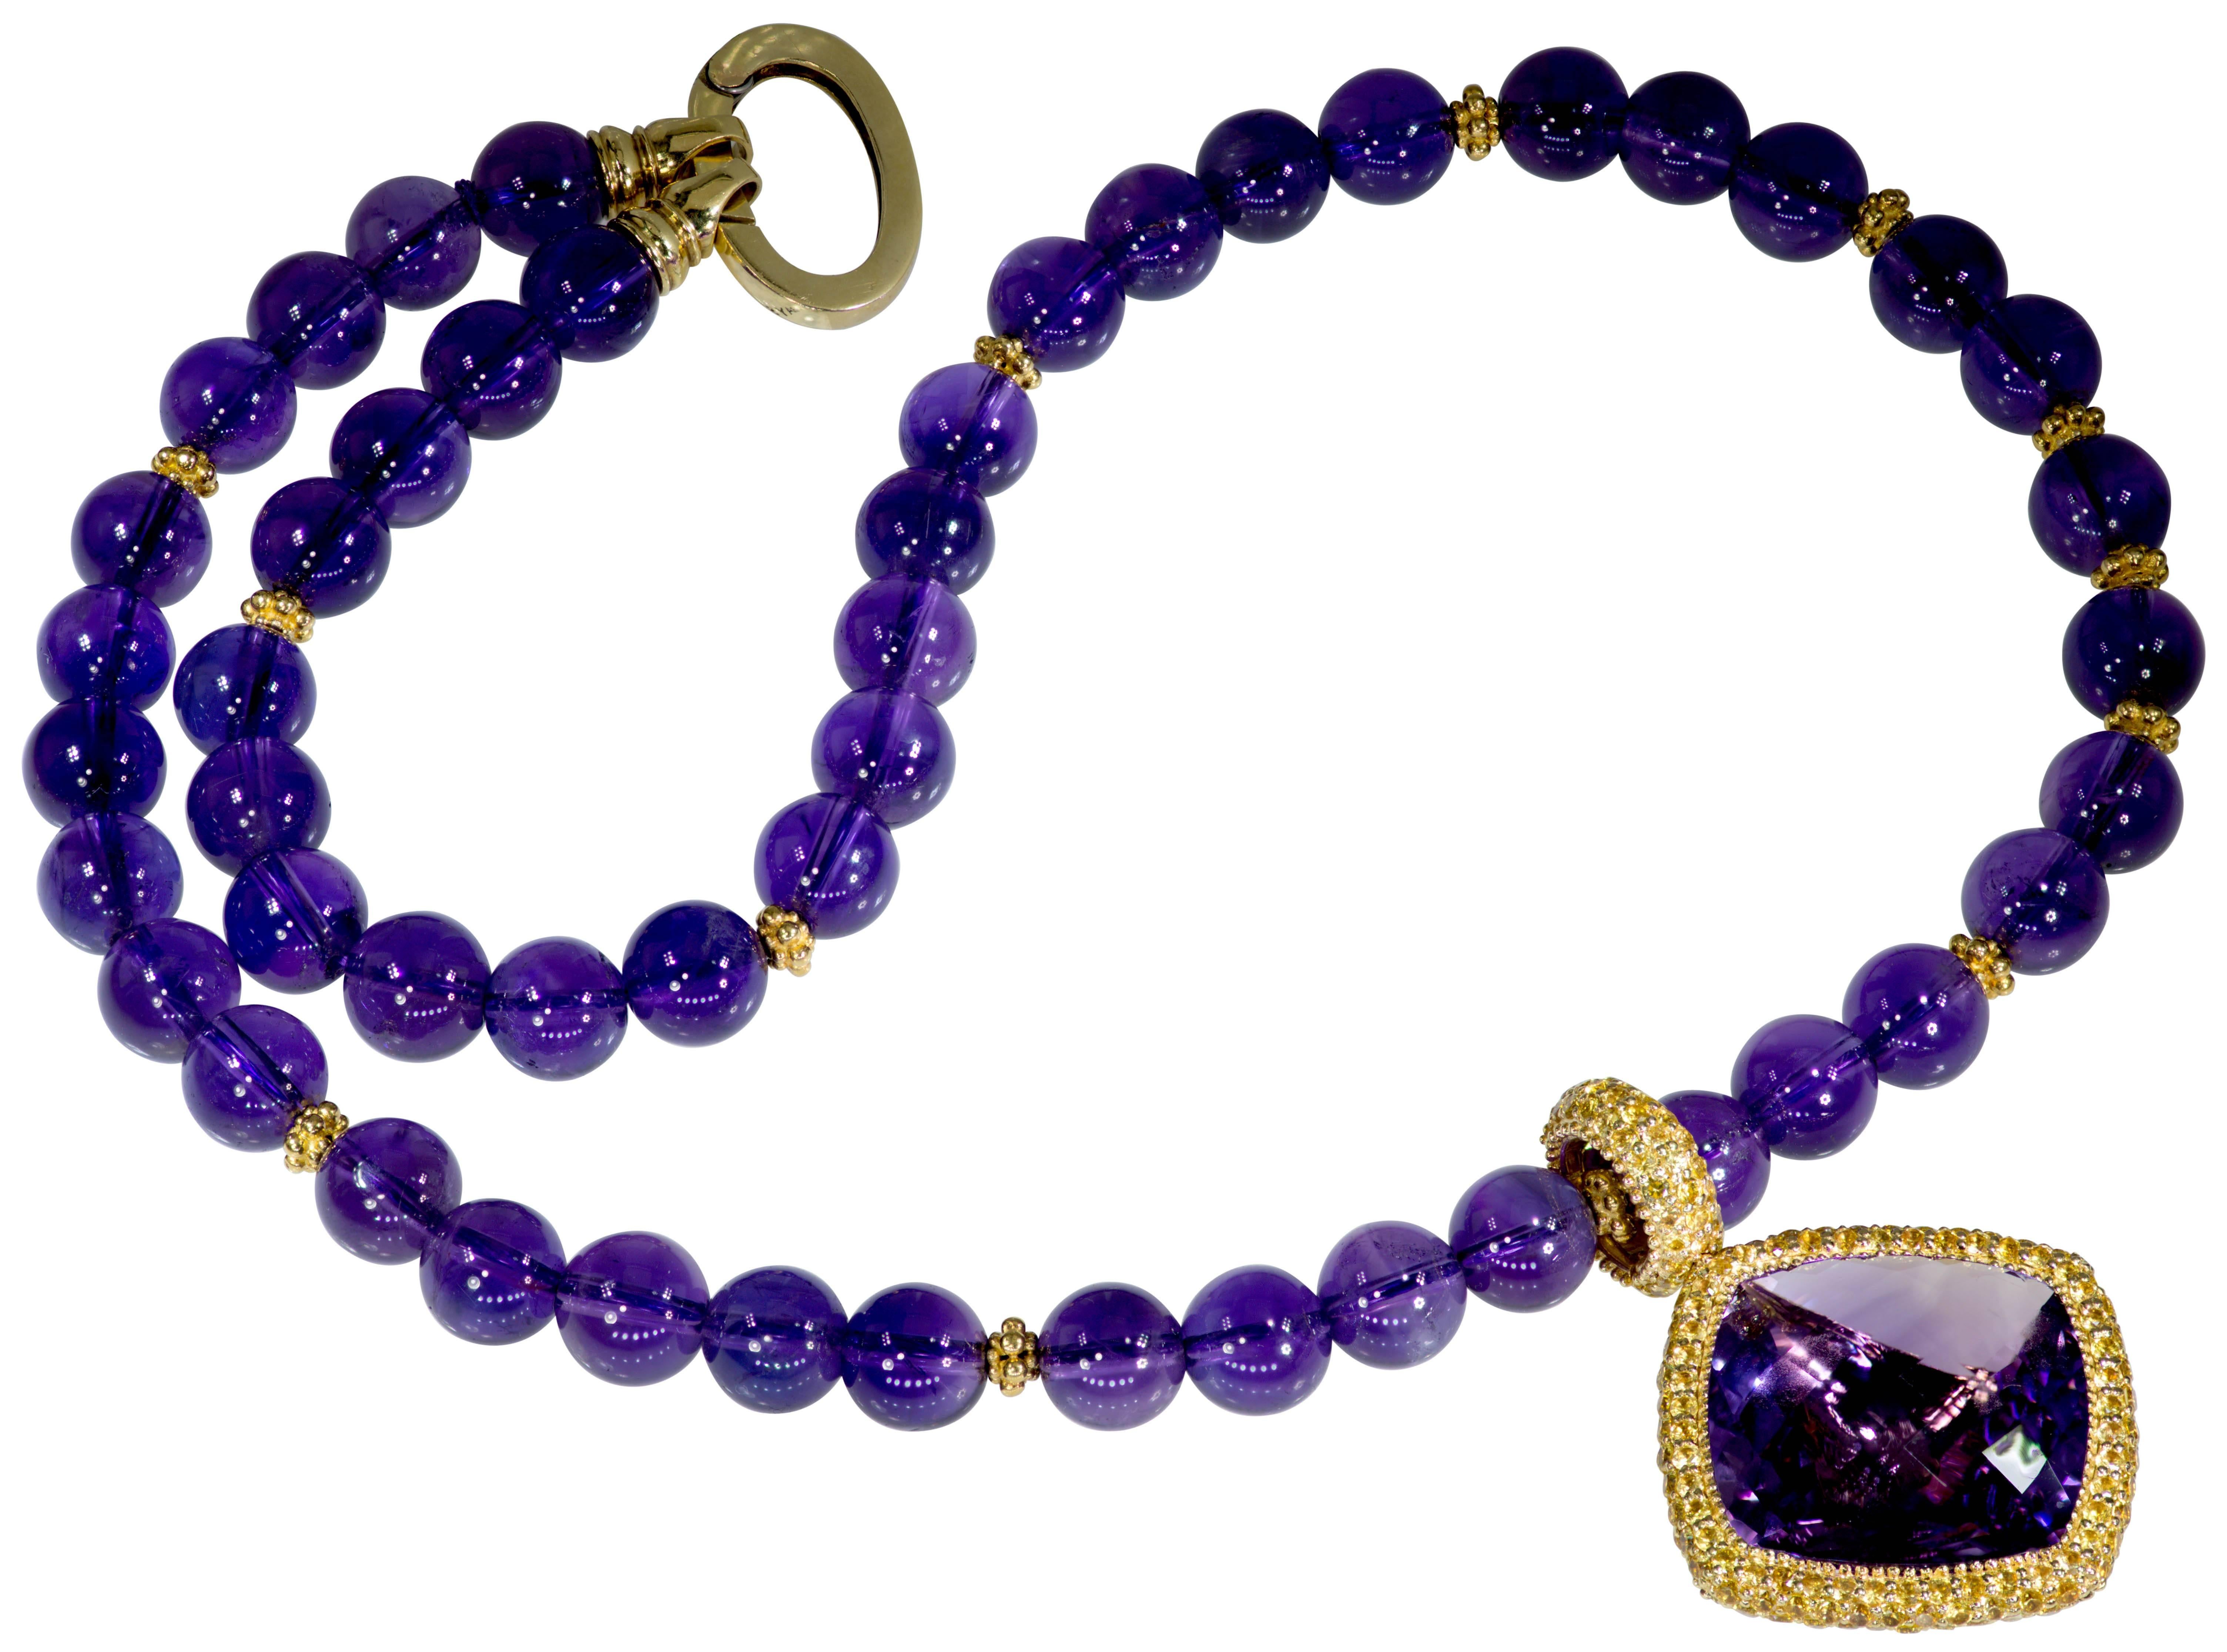 Alex Soldier Sapphire Amethyst Gold Pendant Necklace Enhancer on Amethyst Beads 2